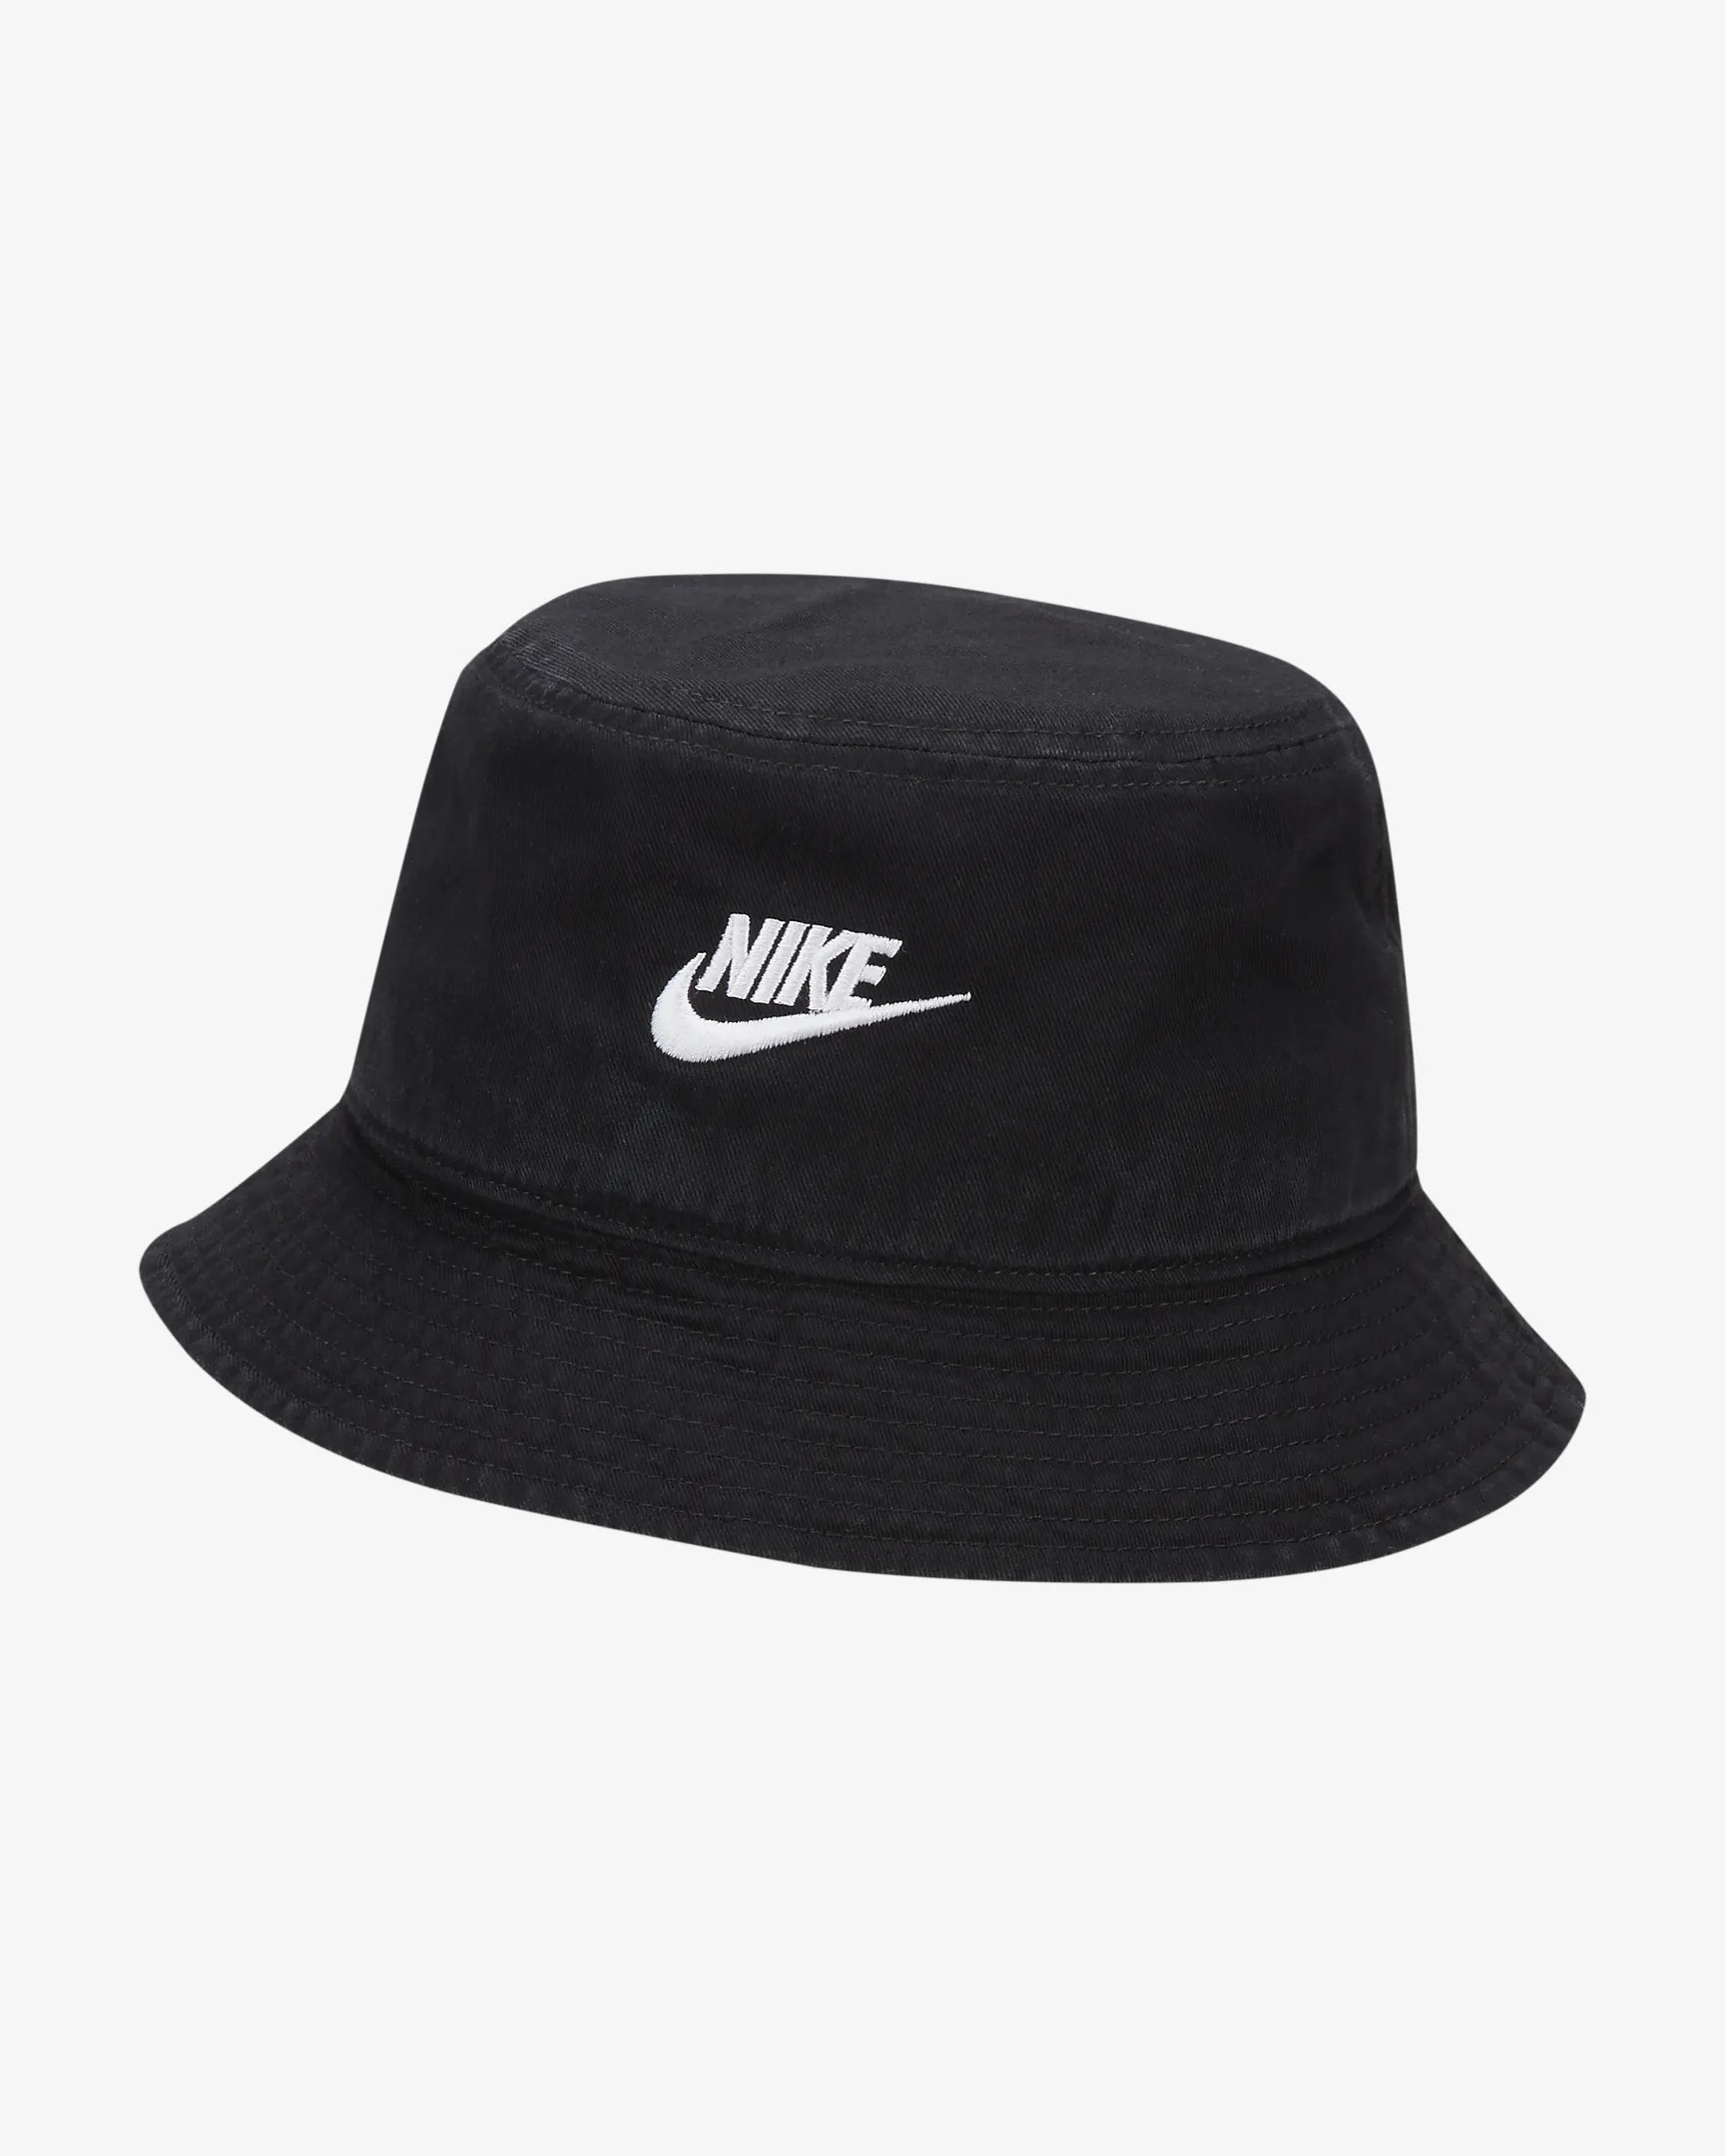 Nike Nike Apex Bucket Hat | Ozmosis | Hats